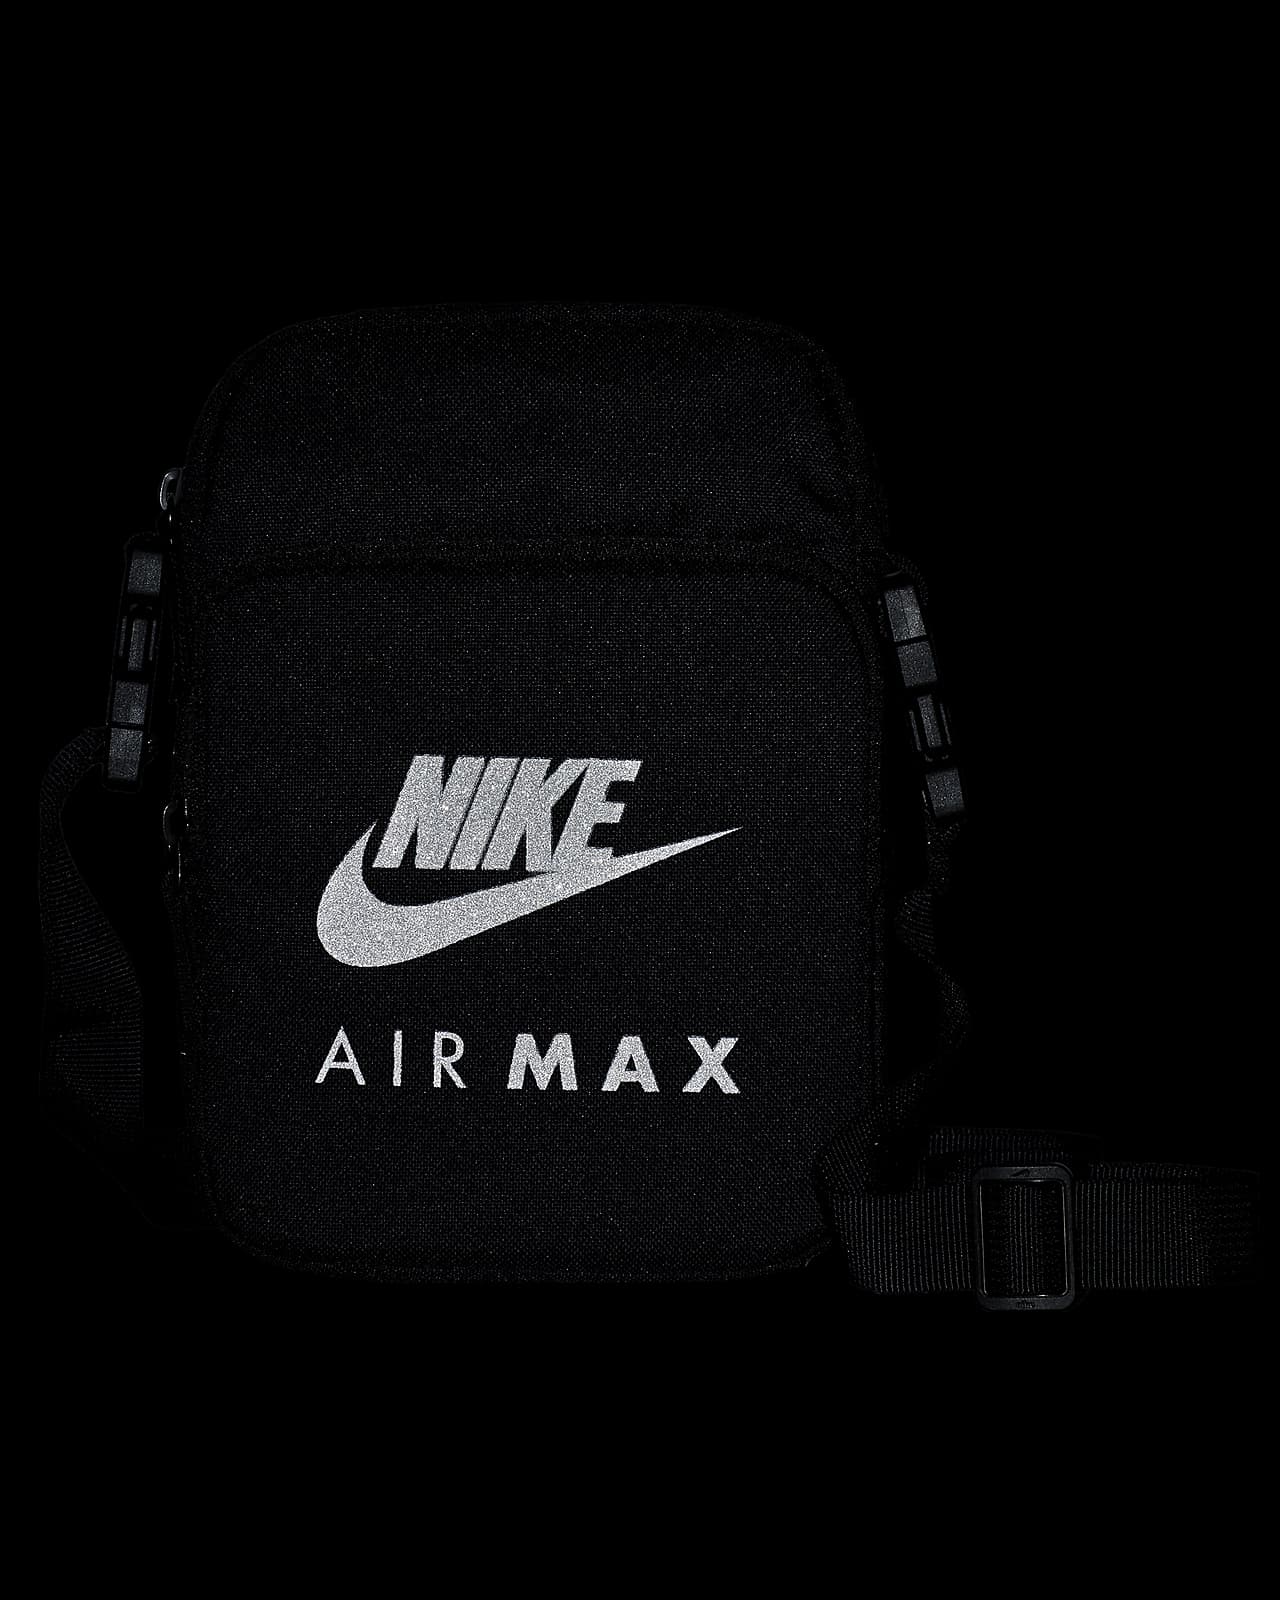 Сумка через плечо Nike Air Max 2.0 